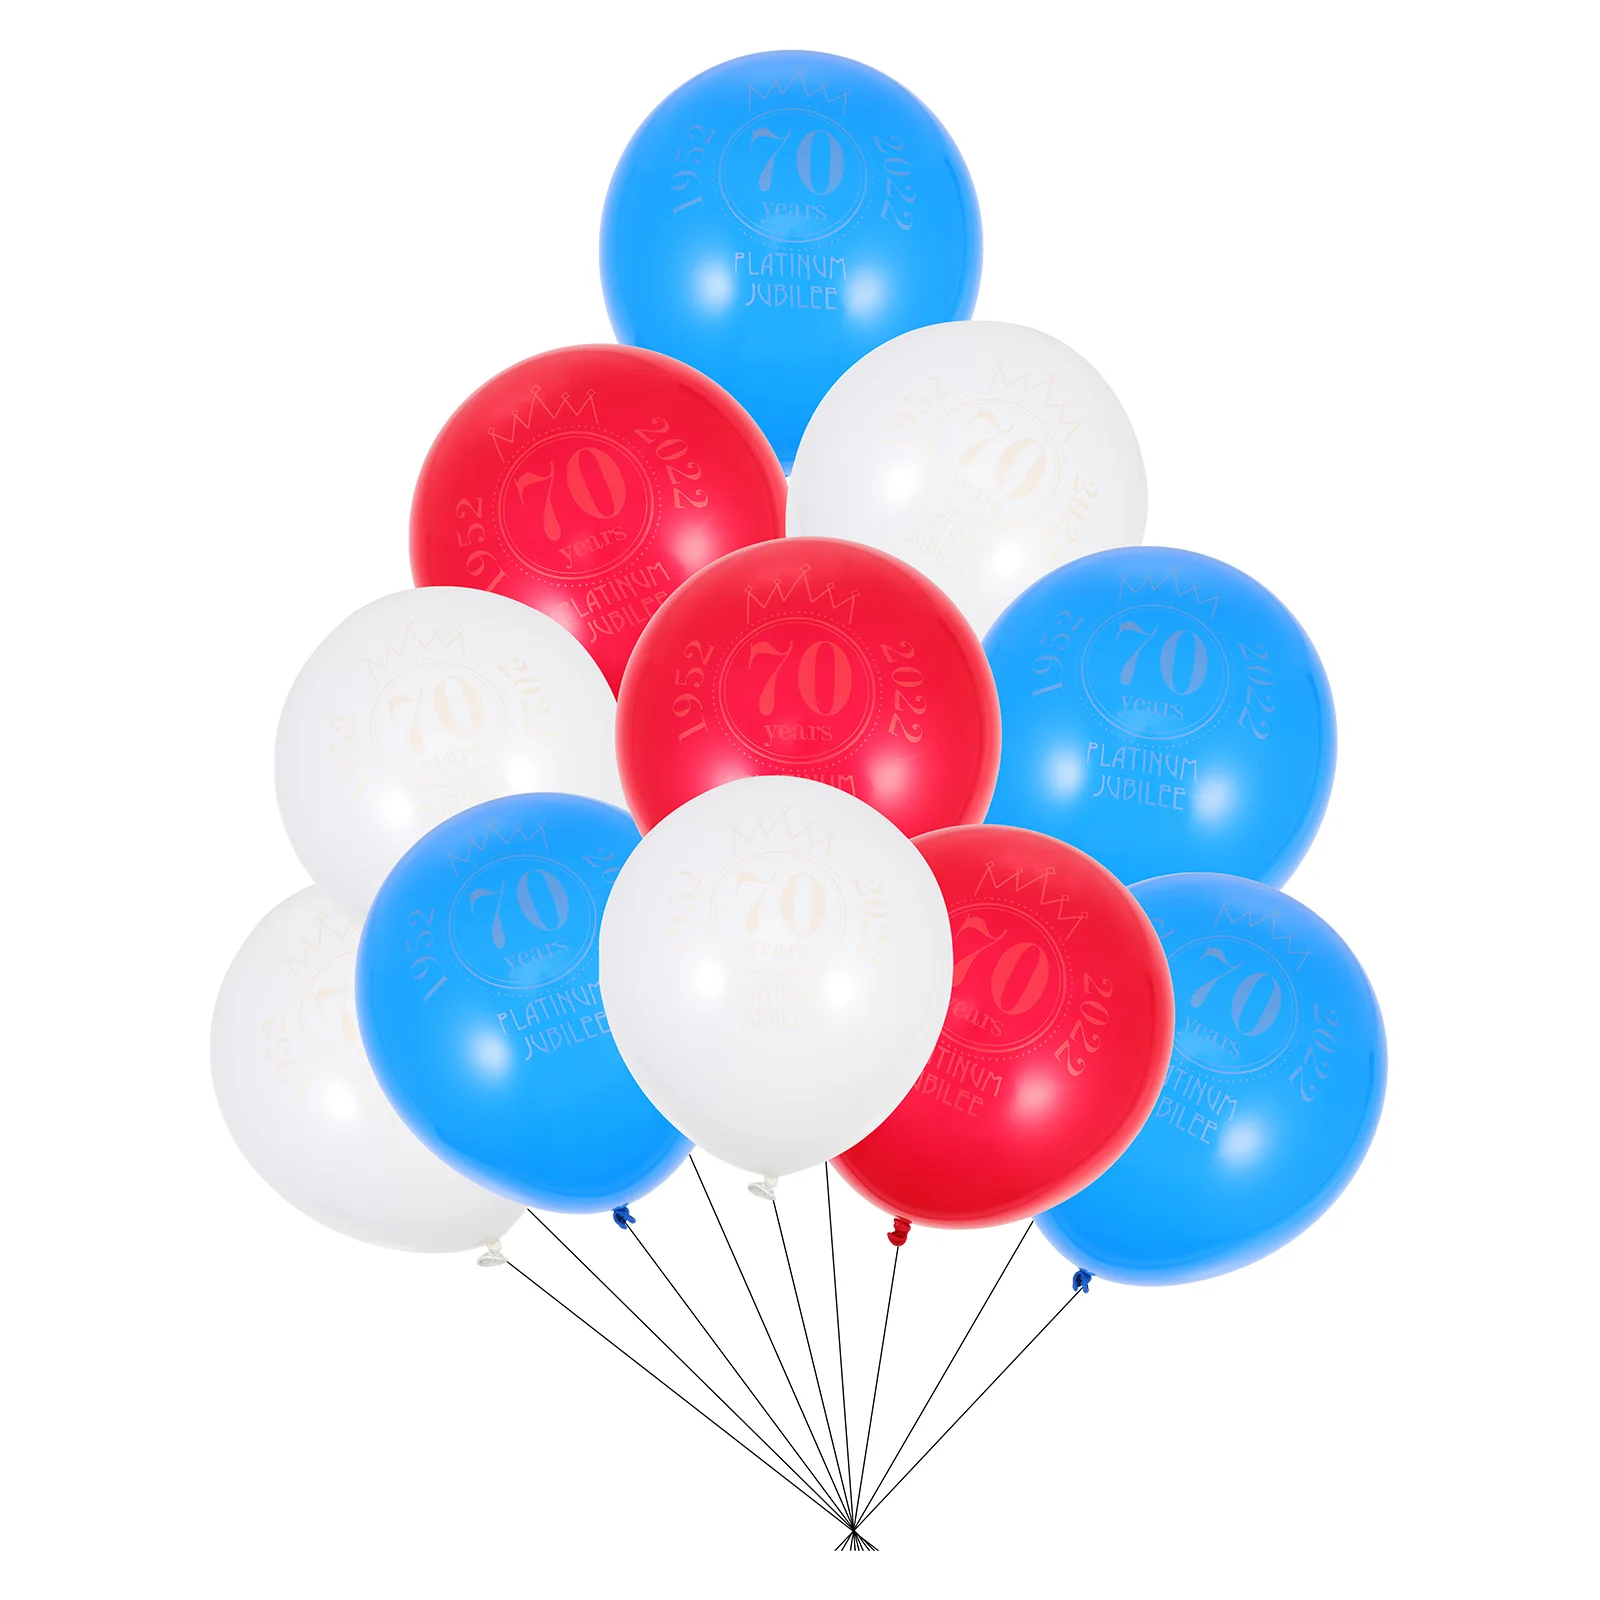 

20pcs UK 70th Anniversary Balloons Ornament Platinum Jubilee Balloons Decors